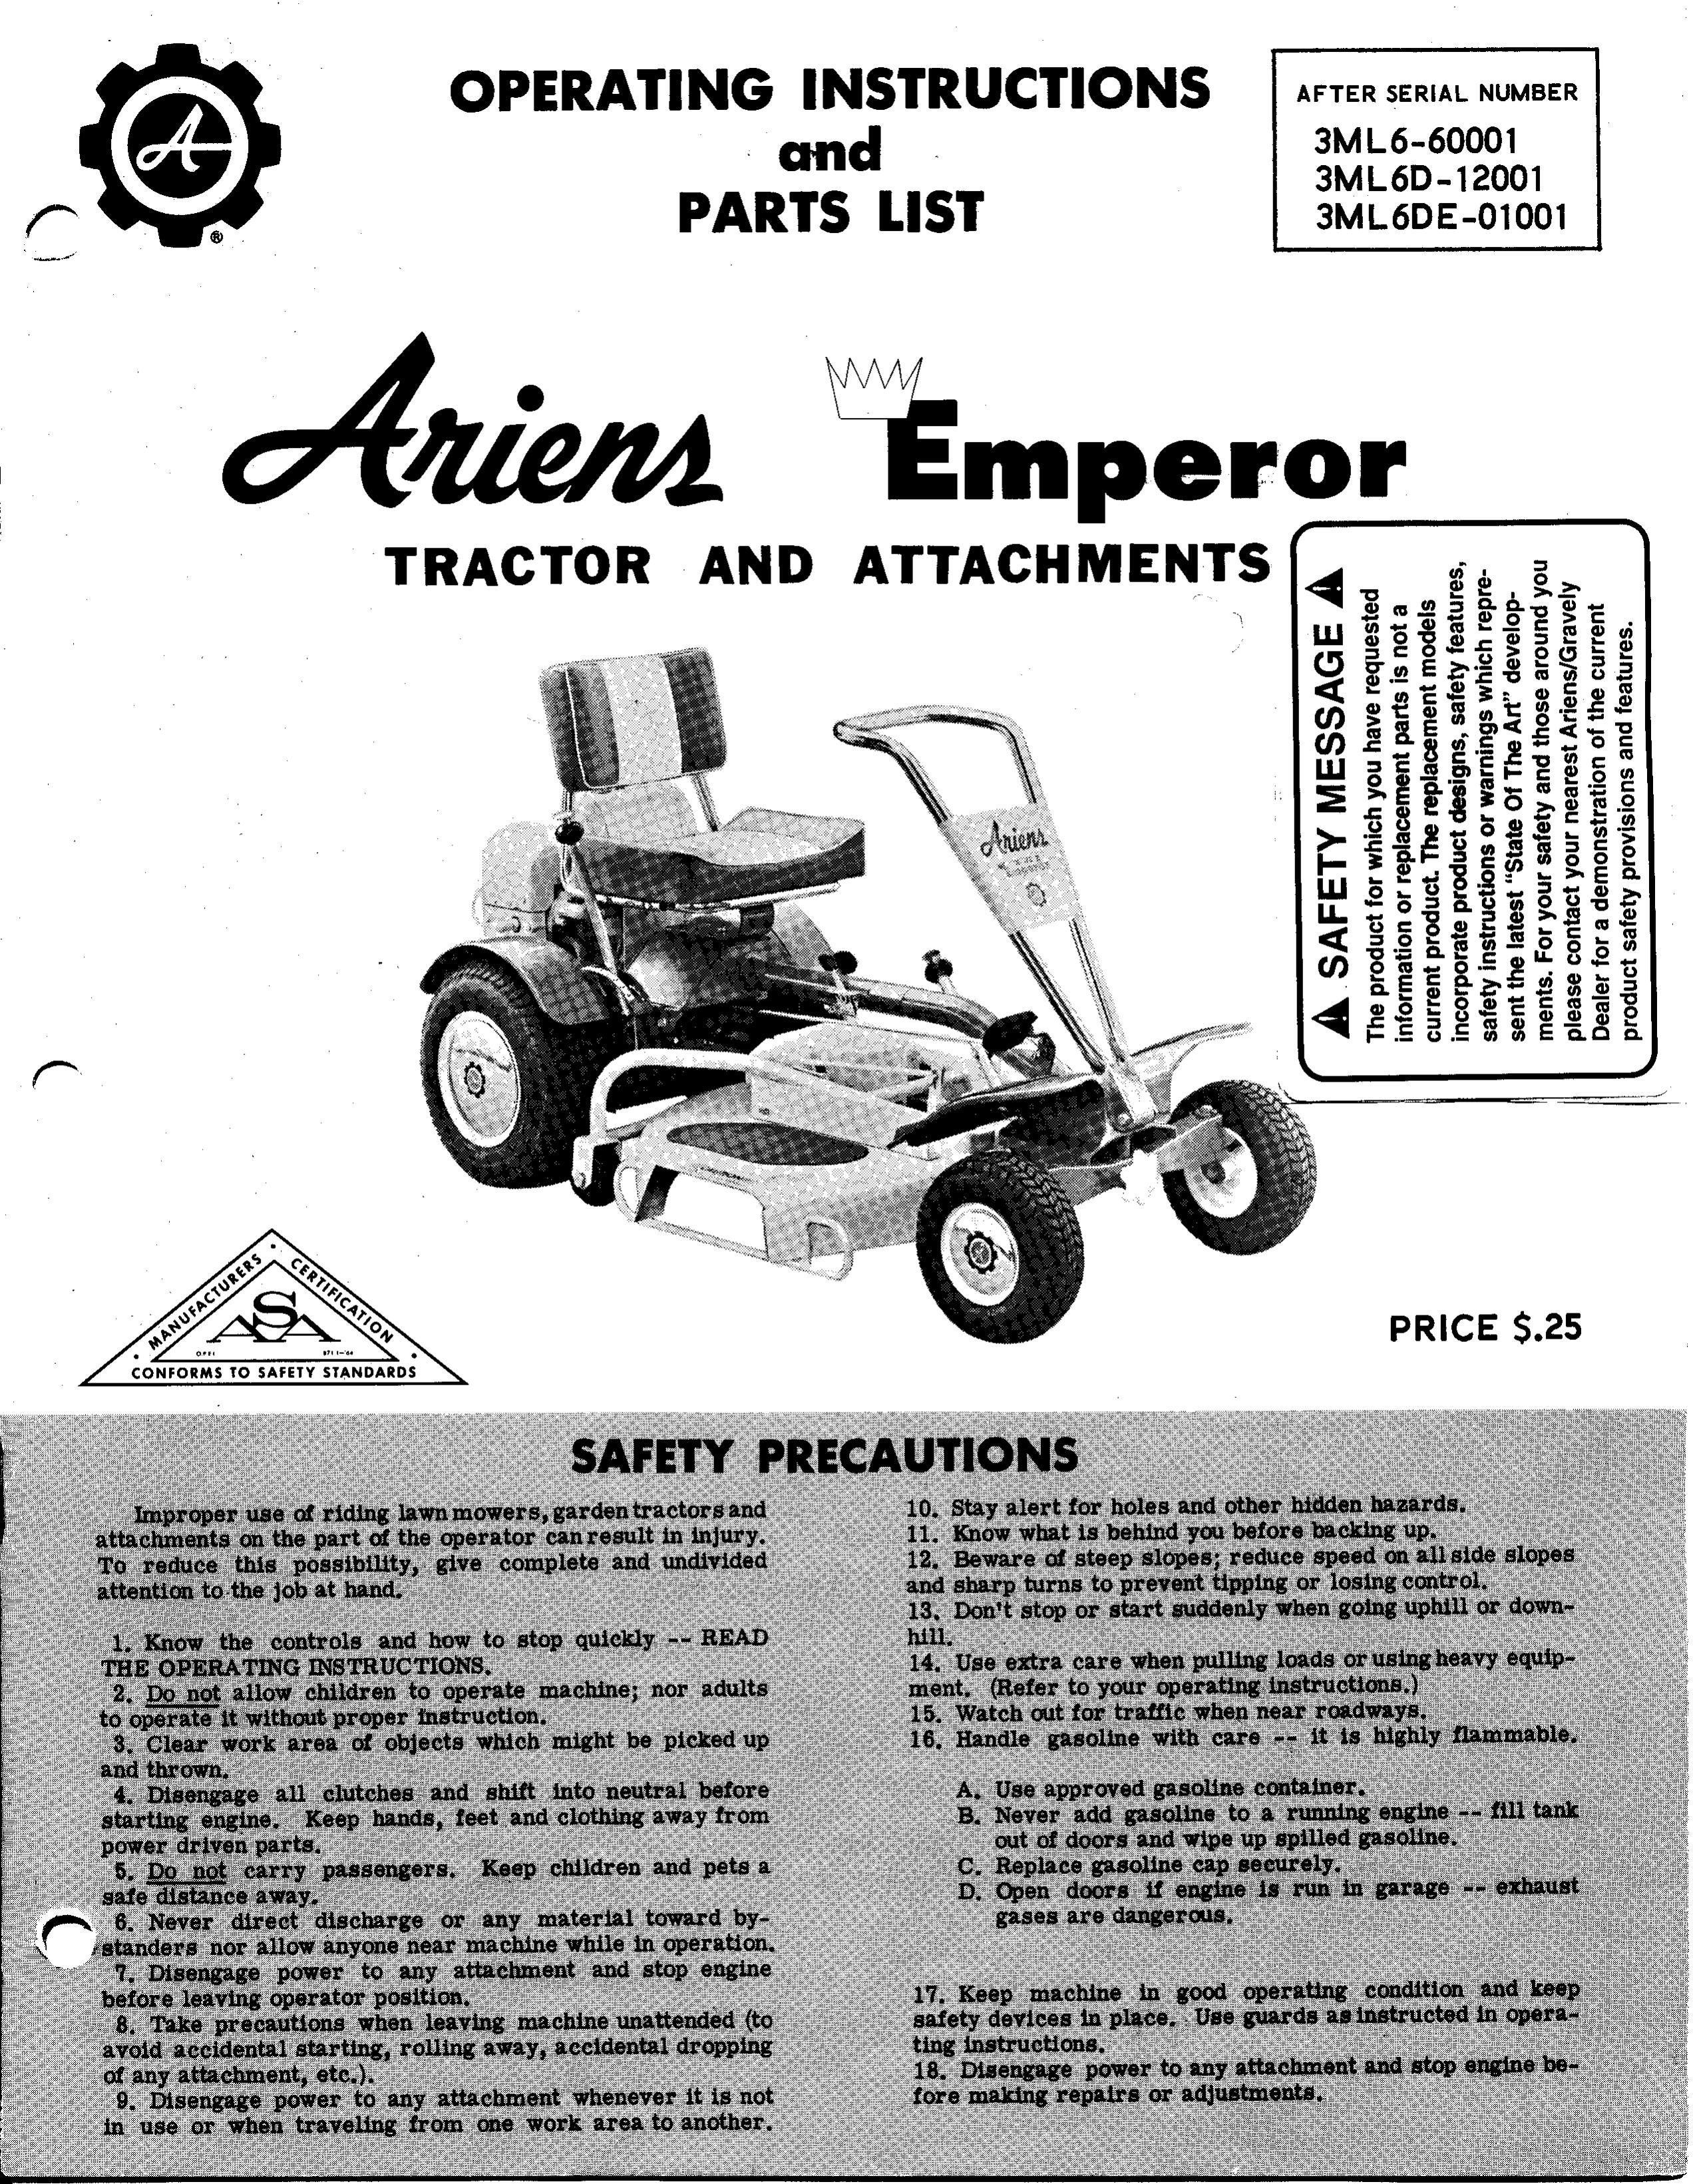 Ariens 3ML6DE-01001 Lawn Mower User Manual